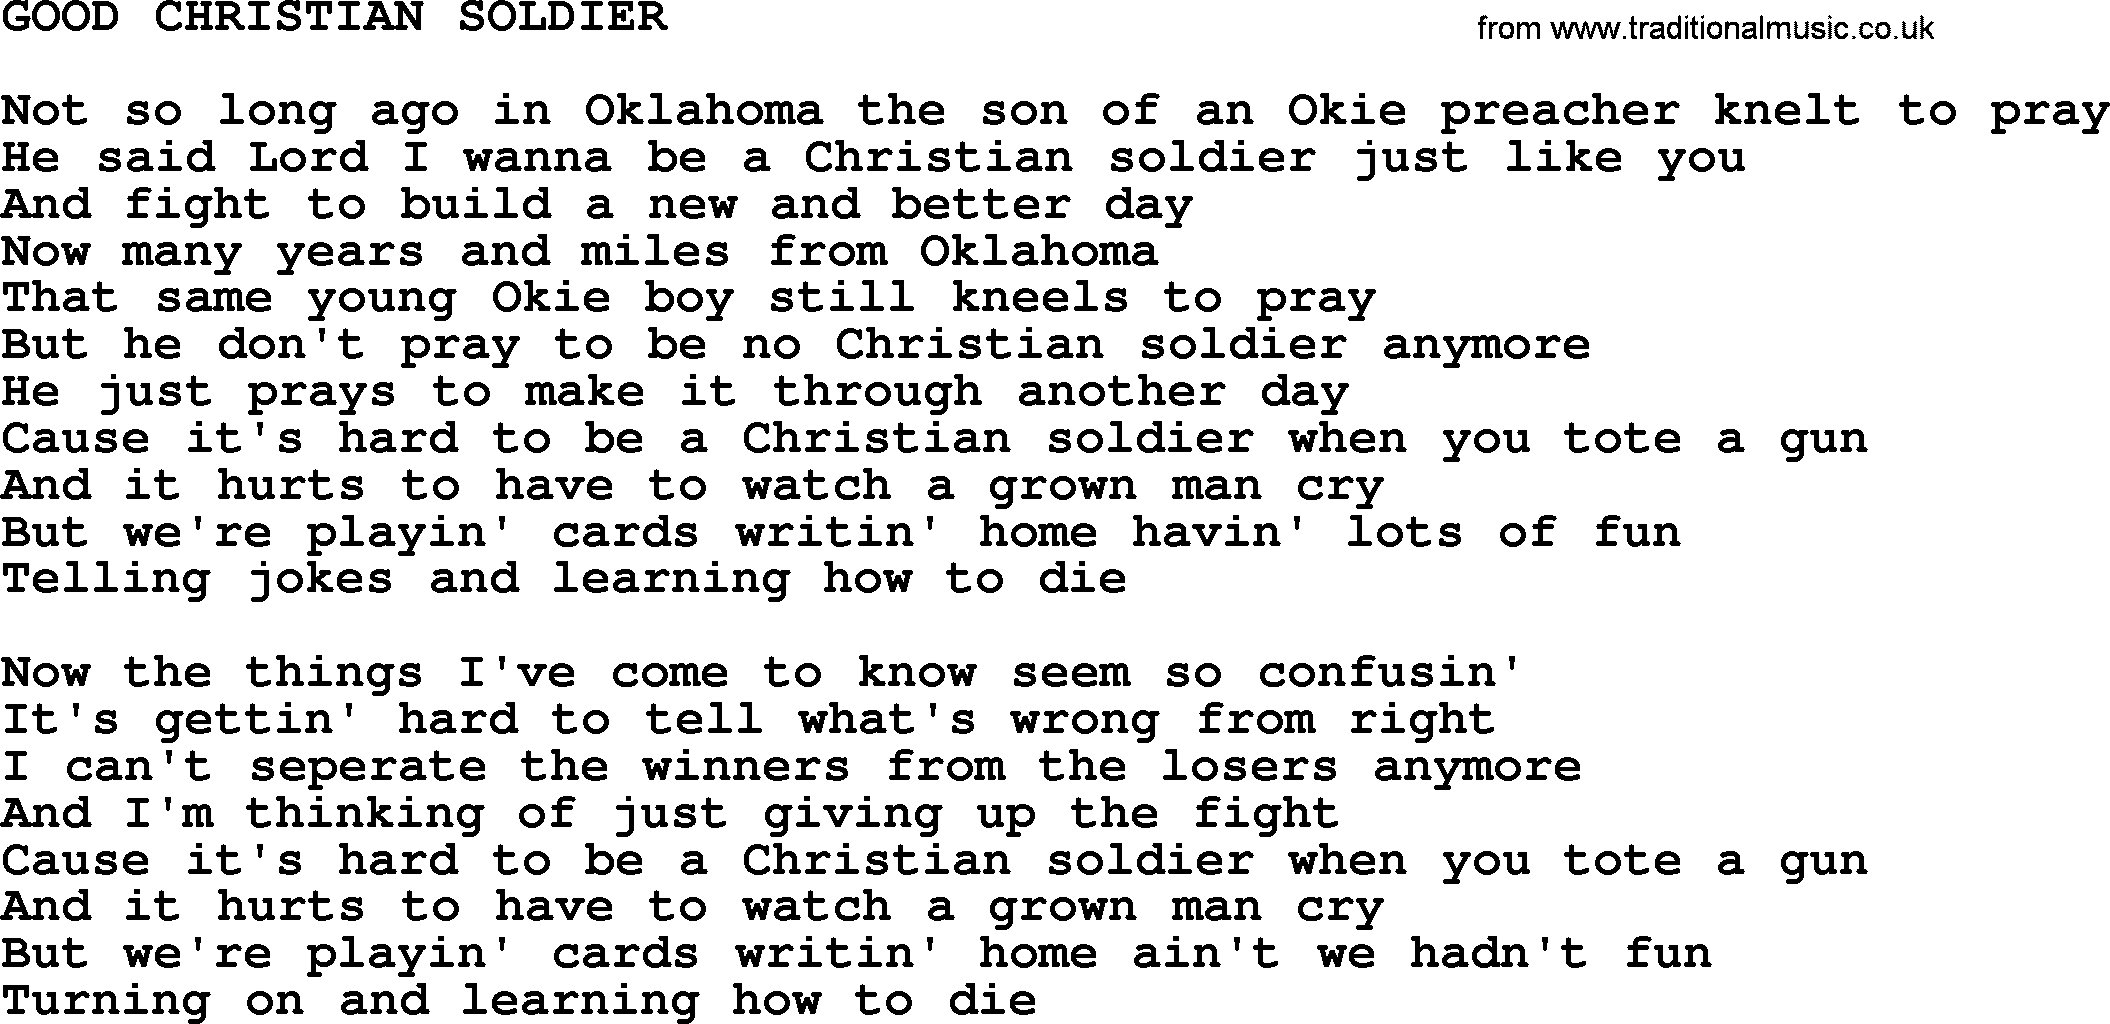 Kris Kristofferson song: Good Christian Soldier lyrics